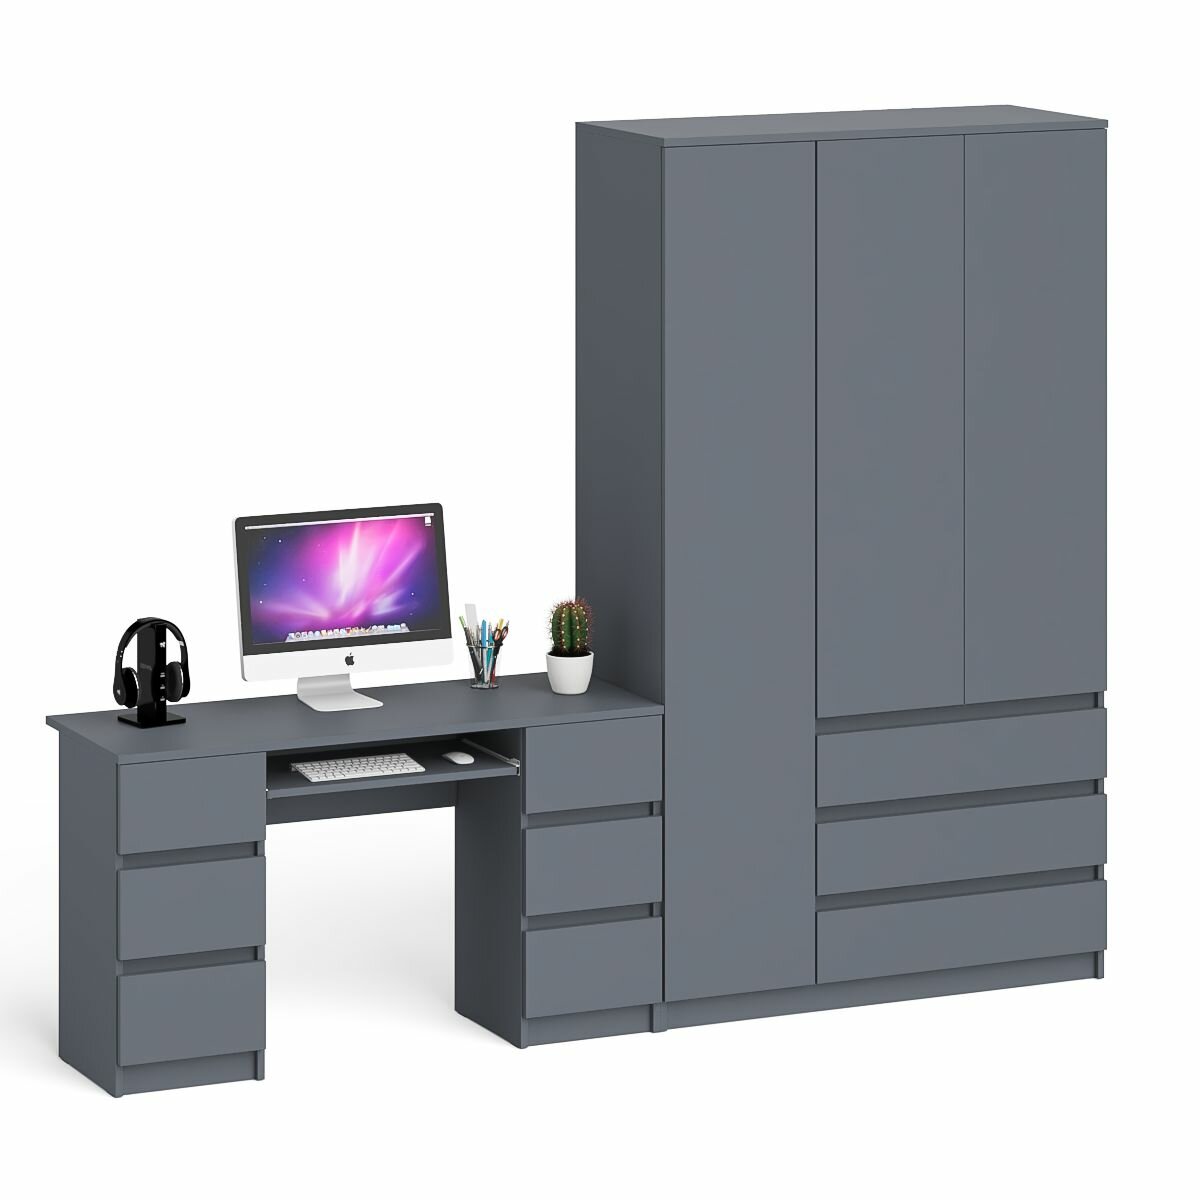 Стол компьютерный СВК Мори 2-х тумбовый со шкафом-комодом цвет графит, 255,8х50,4х209,6 см.